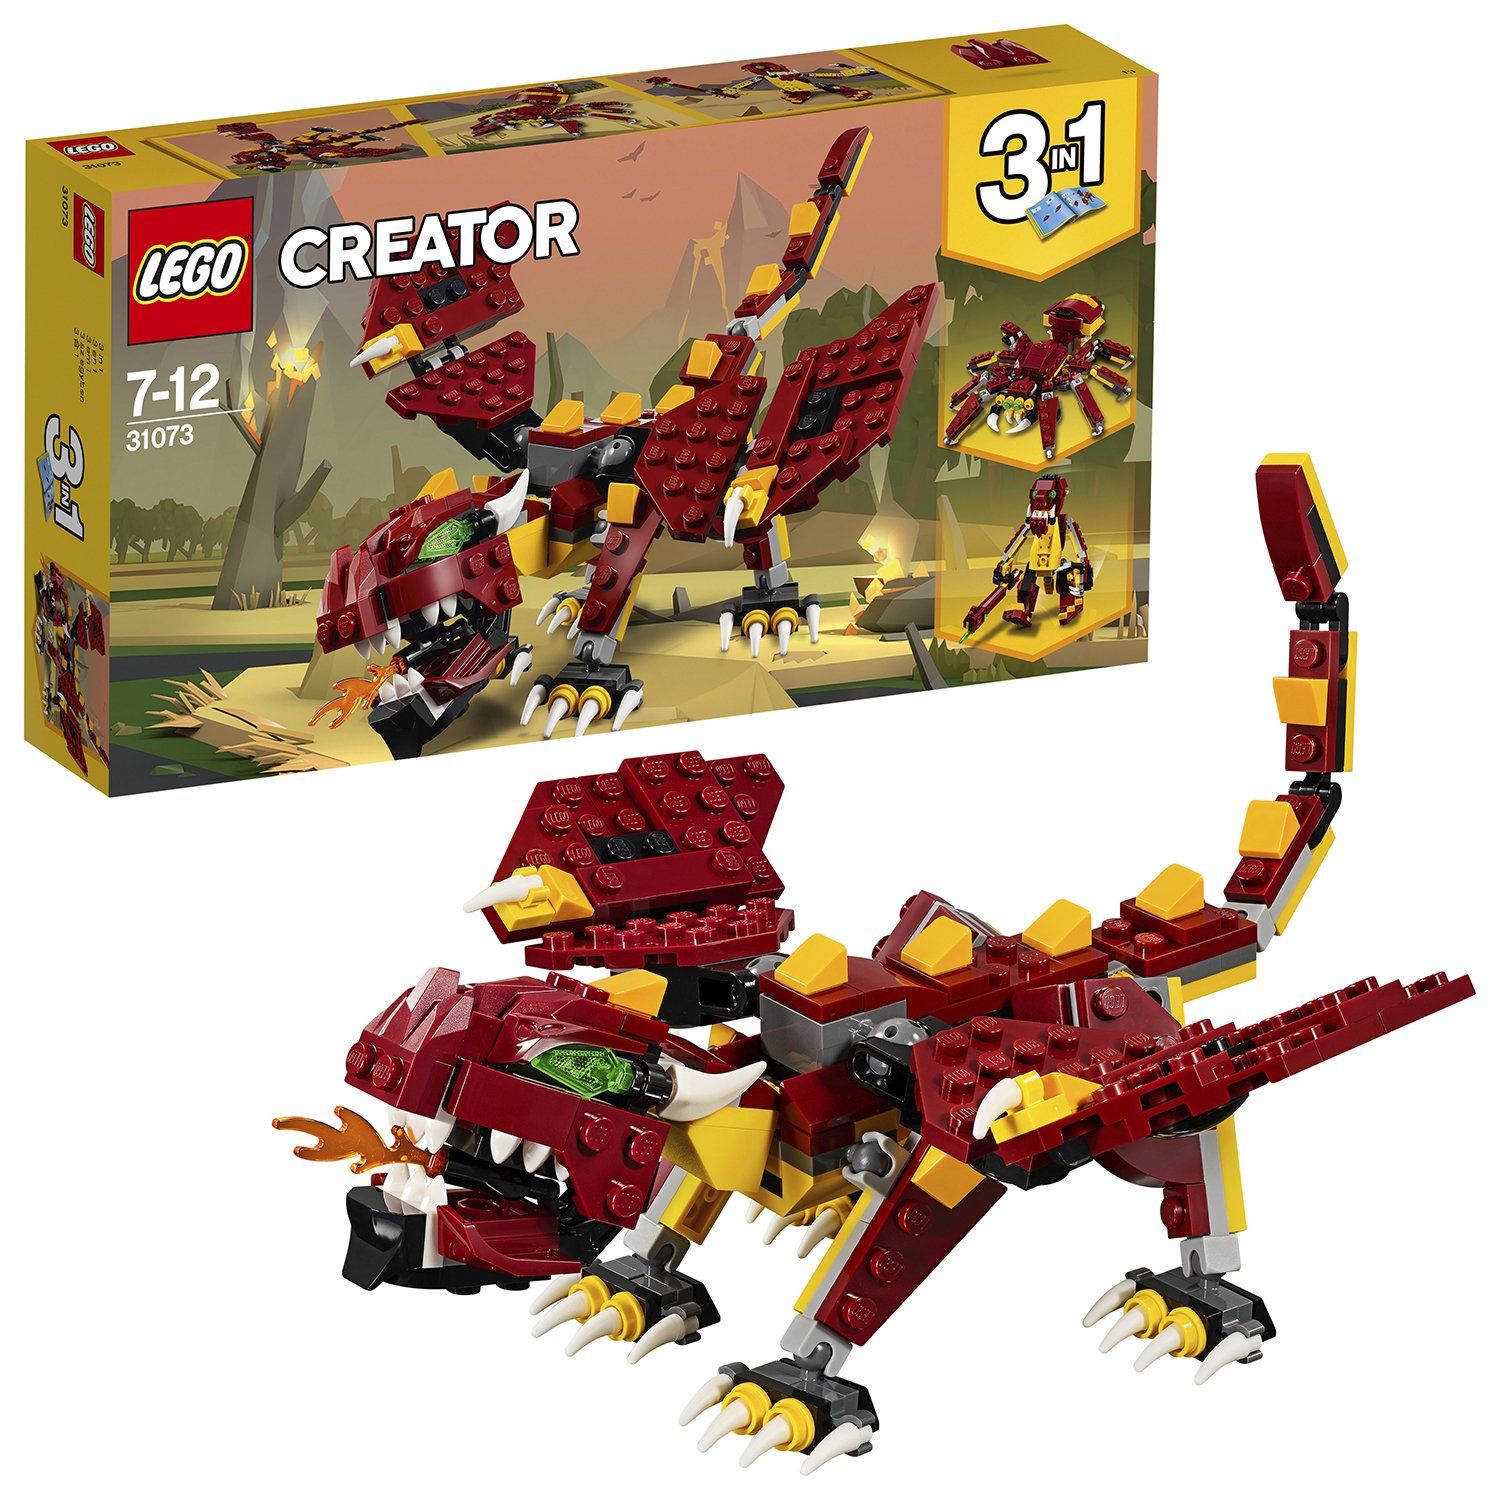 LEGO Creator Mythical Creatures Dragon Toy Set - 31073